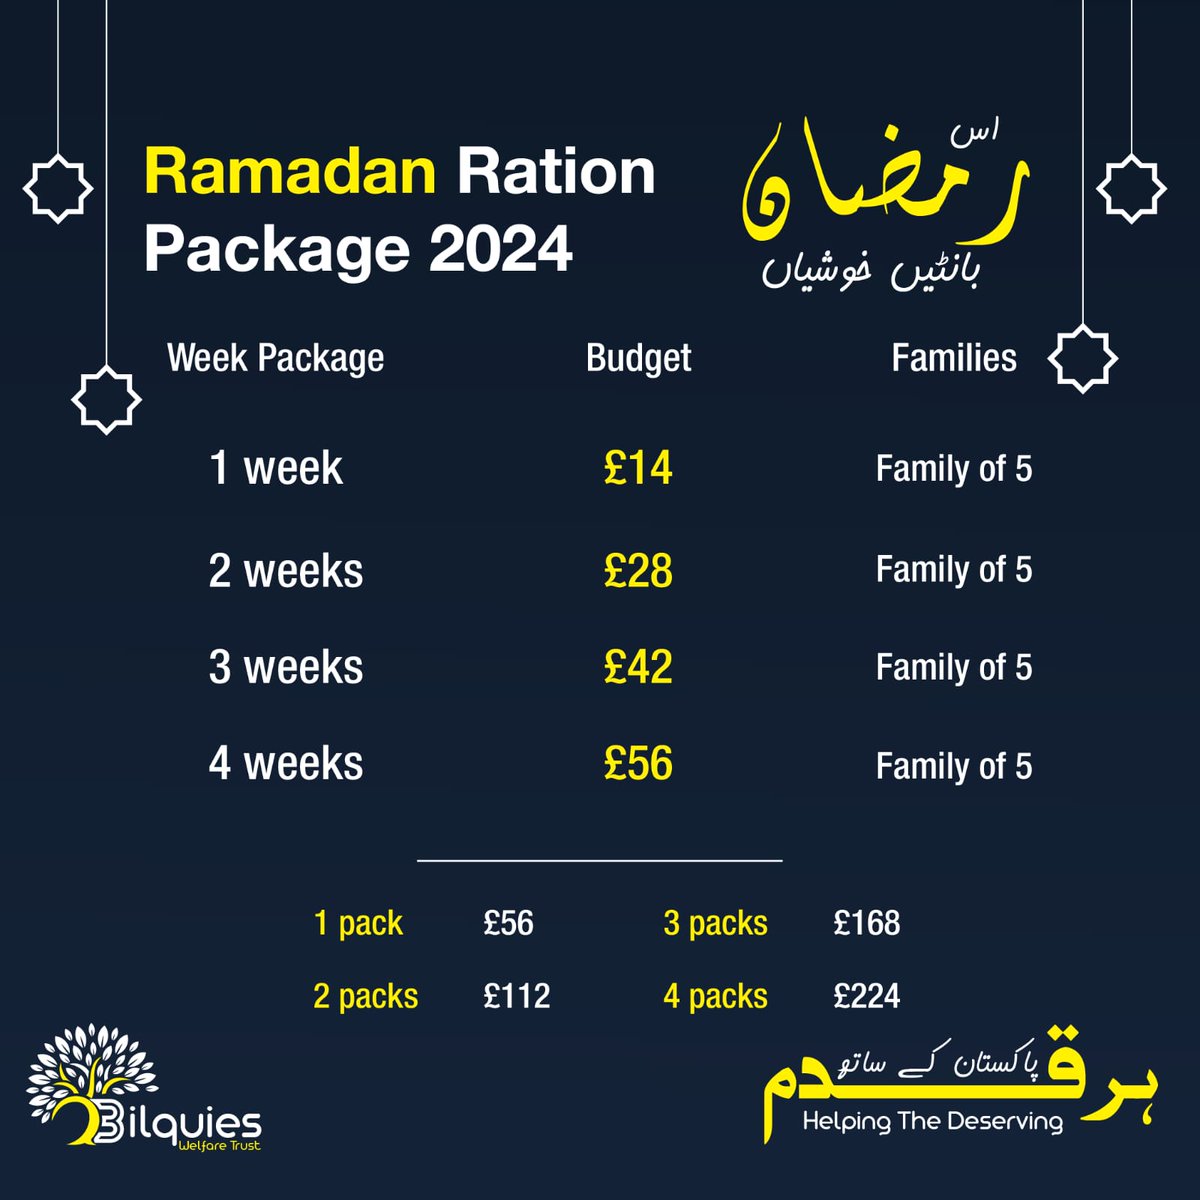 #RamadanKareem #Ramadan #ramadanmubarak #Ramadan2024 #donate #rationdistribution #supportbwt @HamzahAhtisham